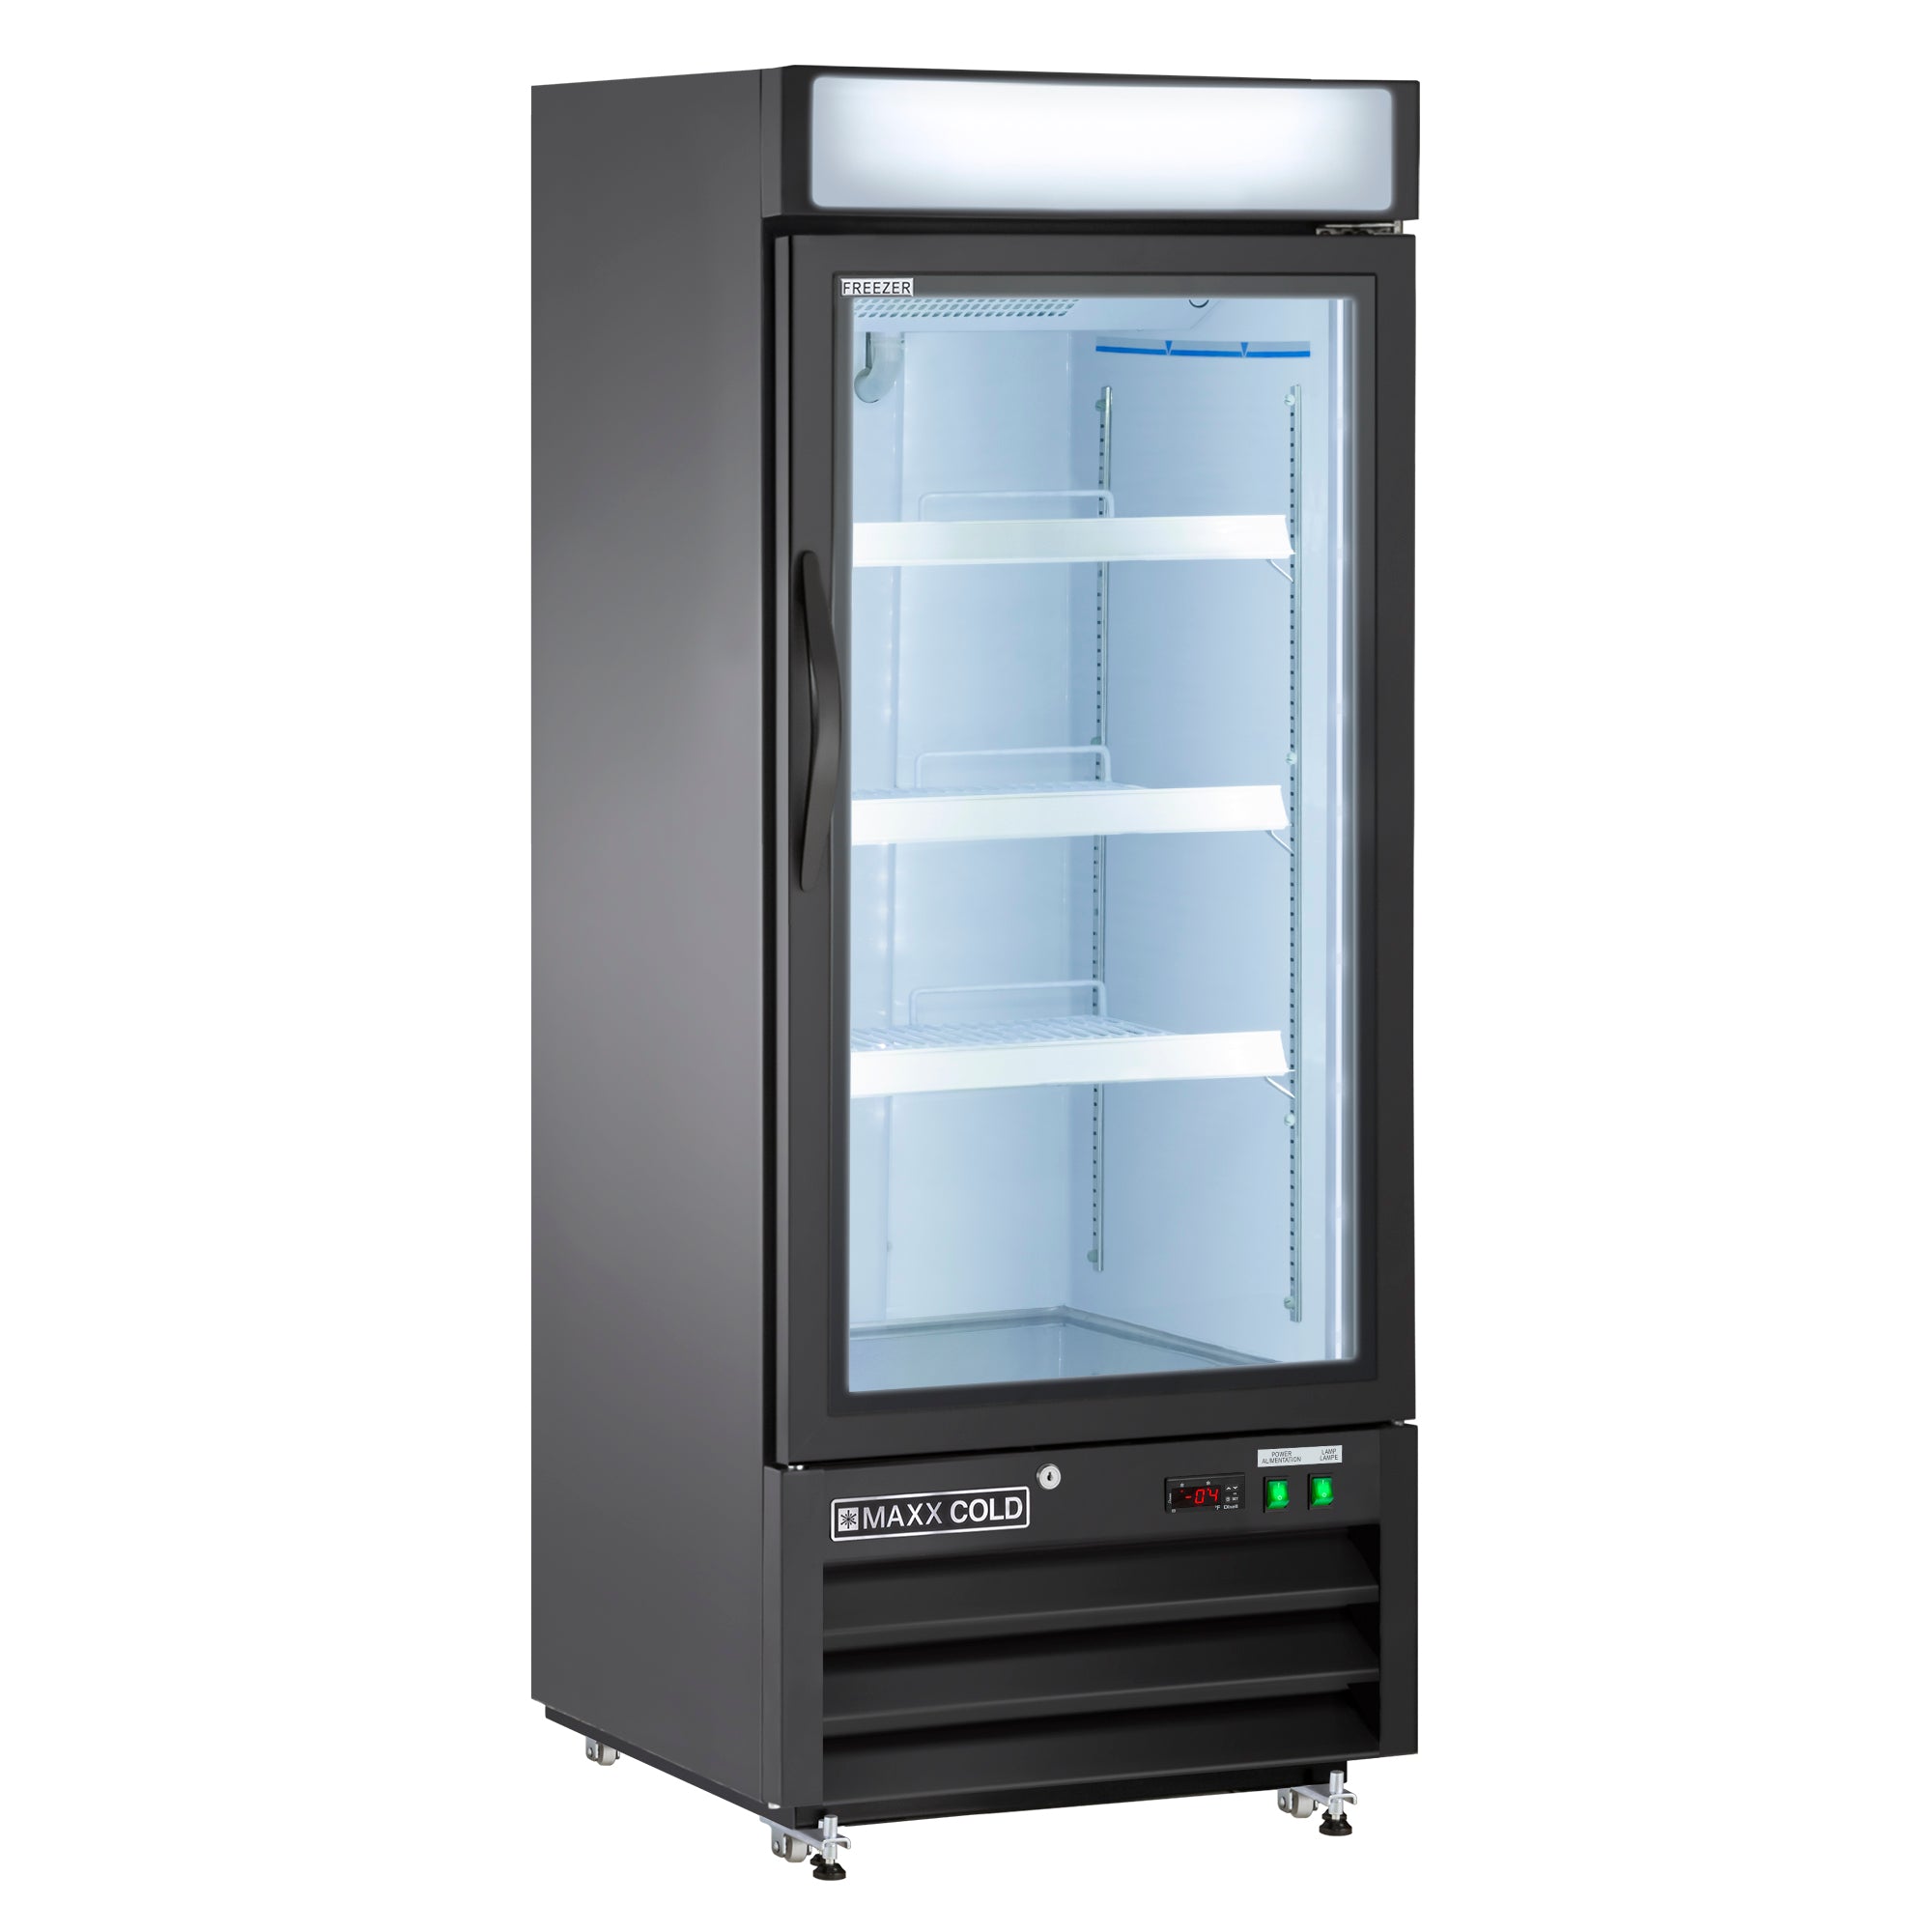 Maxx Cold - MXM1-12FBHC, Maxx Cold Single Glass Door Merchandiser Freezer, Free Standing, 25"W, 12 cu. ft. Storage Capacity, in Black